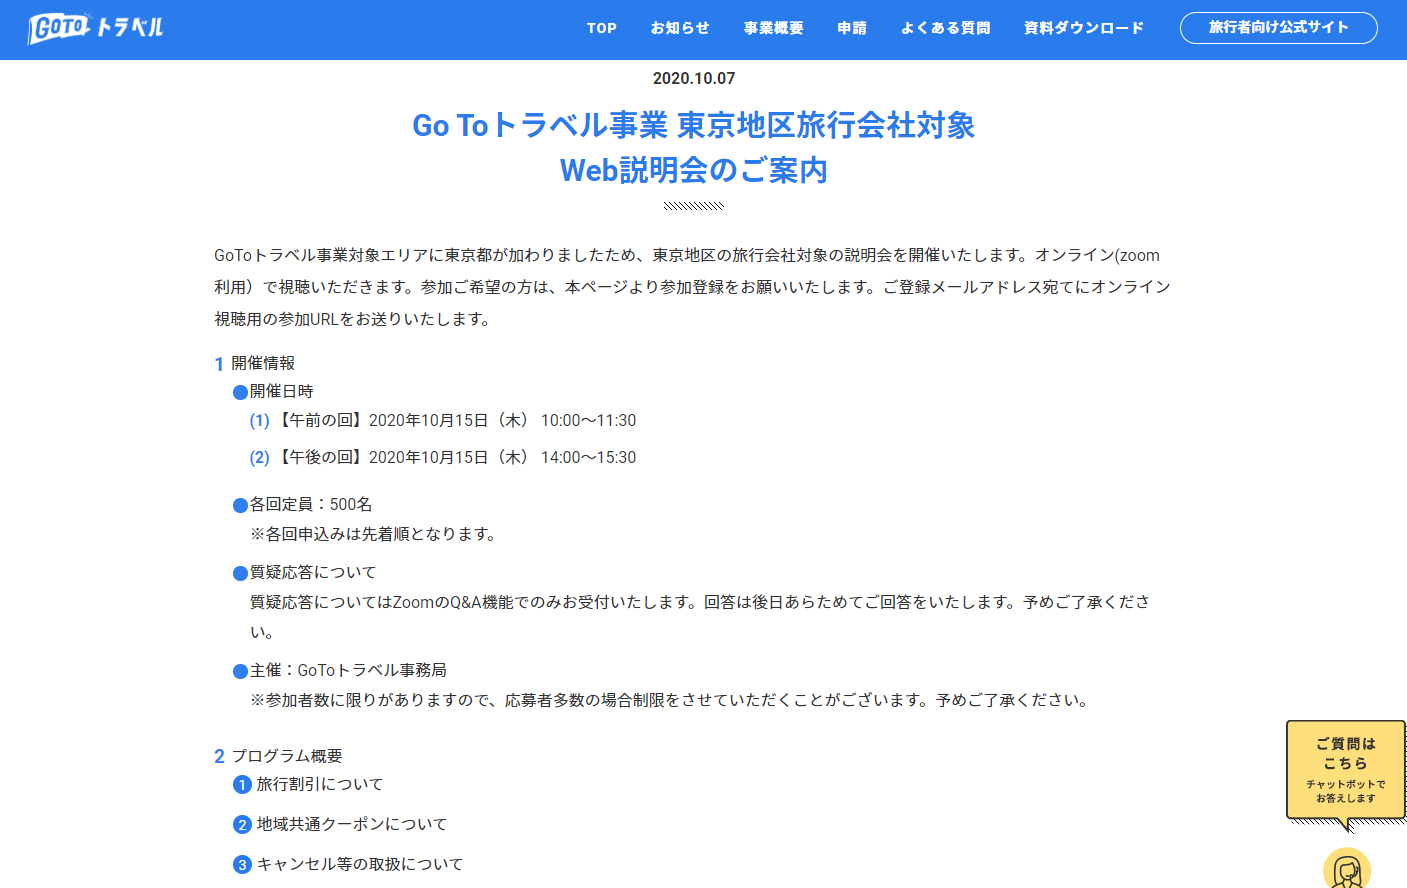 Go To トラベル事務局 10月15日に東京の旅行会社を対象にしたweb説明会開催 先着順で申込を受付 トラベル Watch